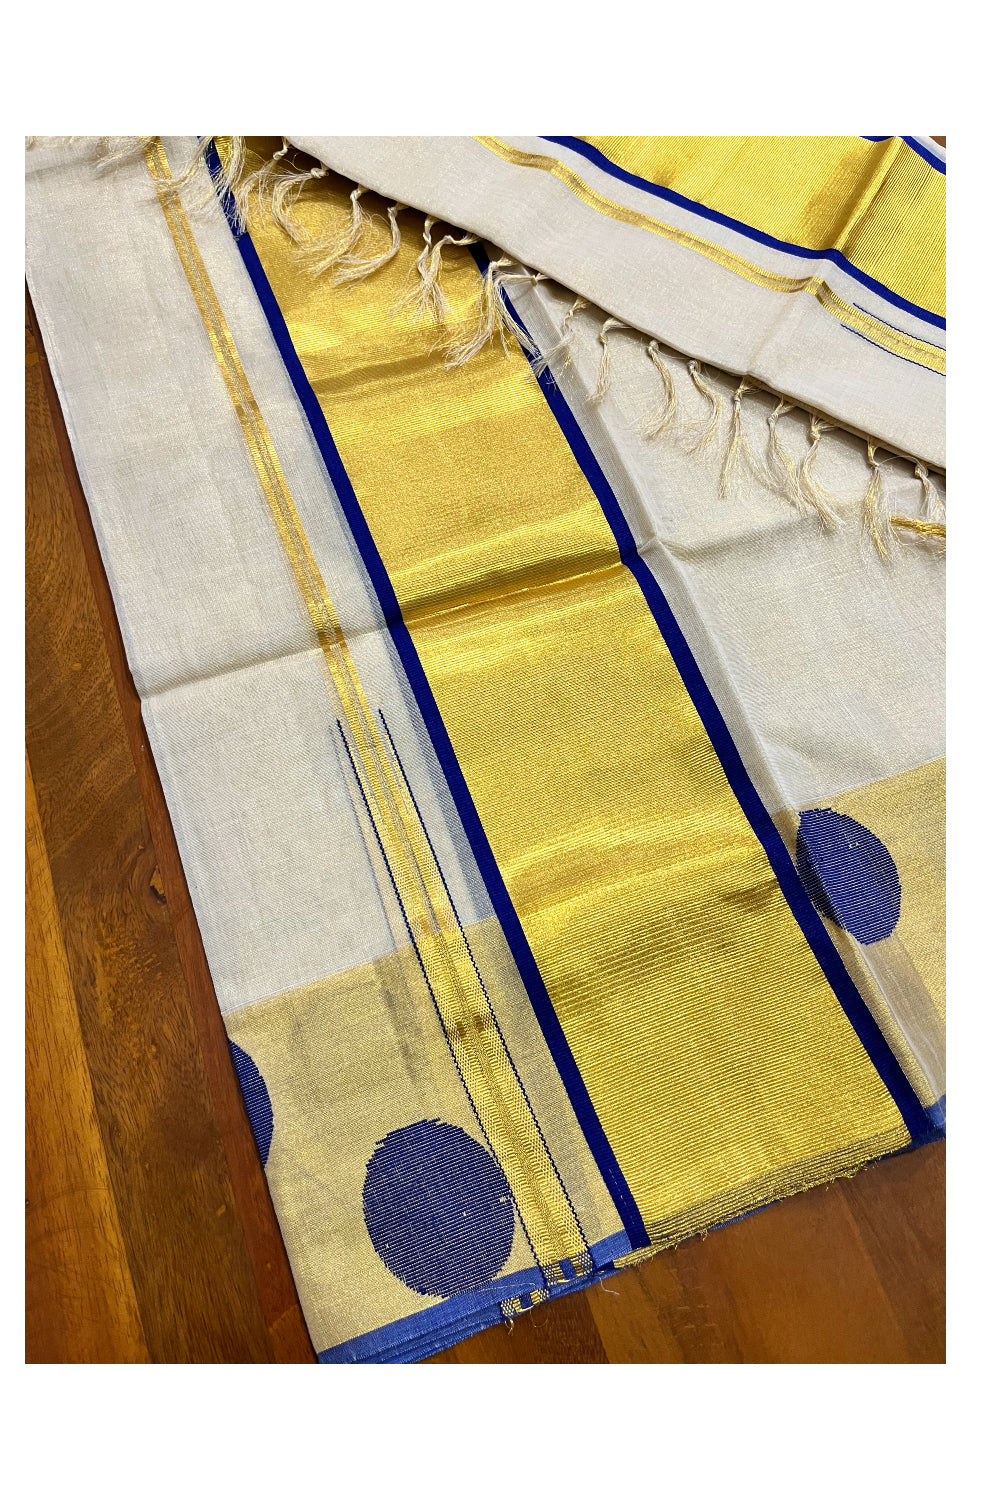 Southloom Handloom Premium Tissue Kasavu Set Mundu With Blue Polka Woven Patterns (Mundum Neriyathum) 2.70 Mtrs